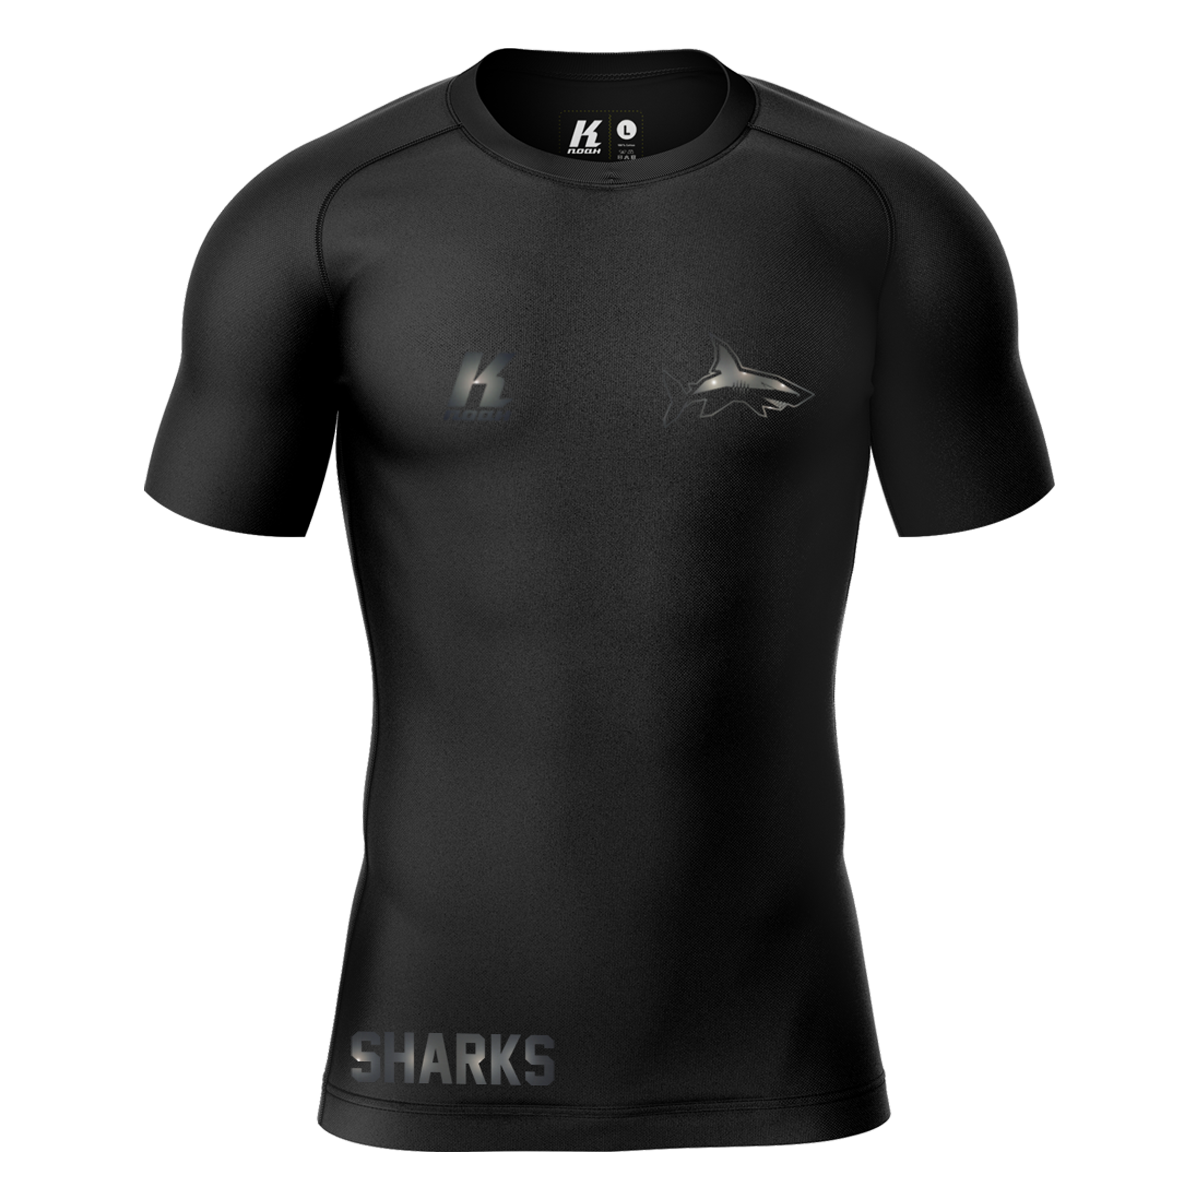 Sharks "Blackline" K.Tech Compression Shortsleeve Shirt